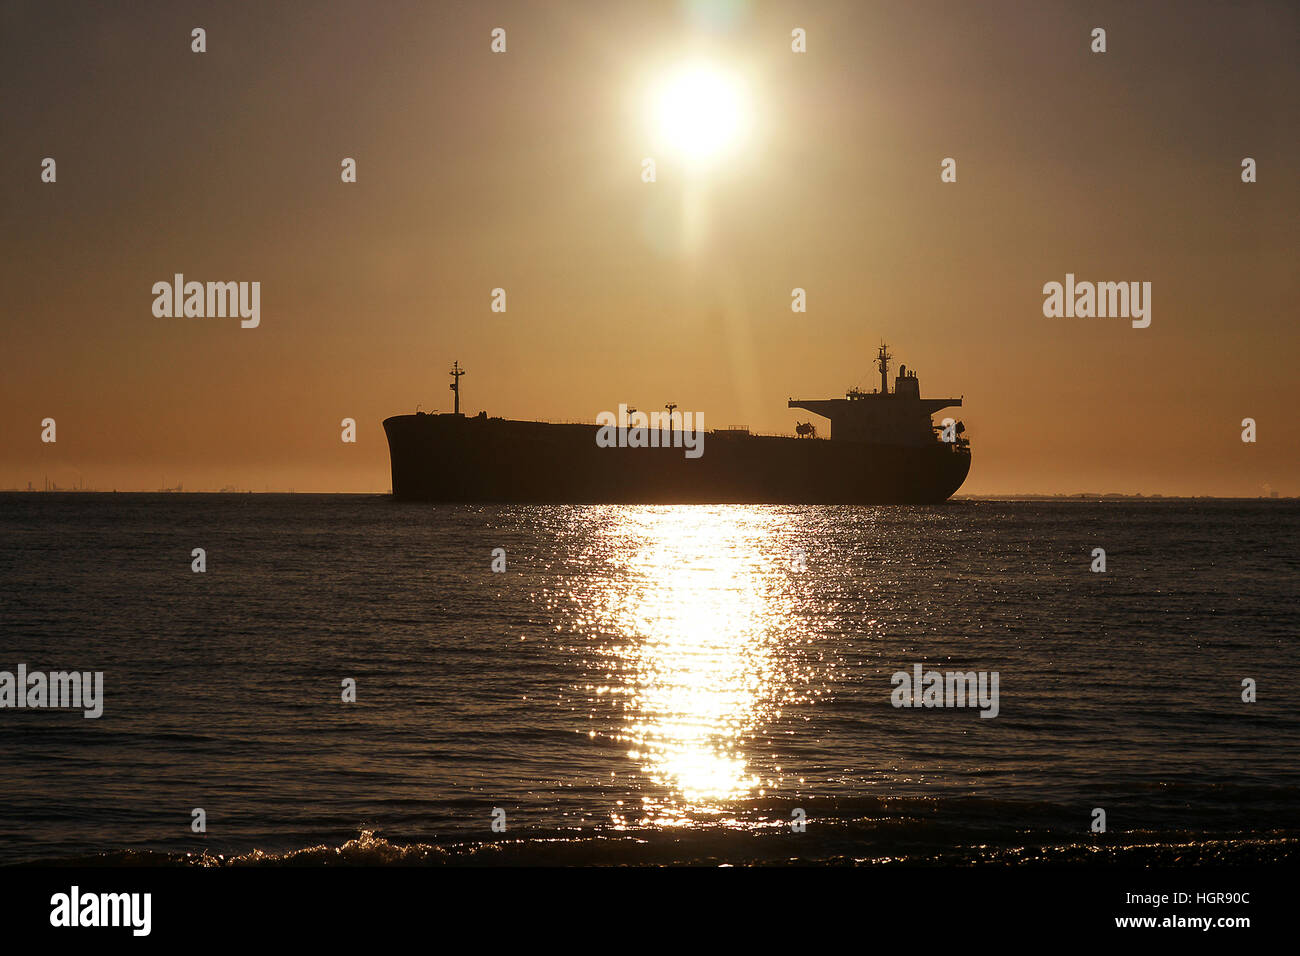 Oil tanker ship, merchant vessel Stock Photo